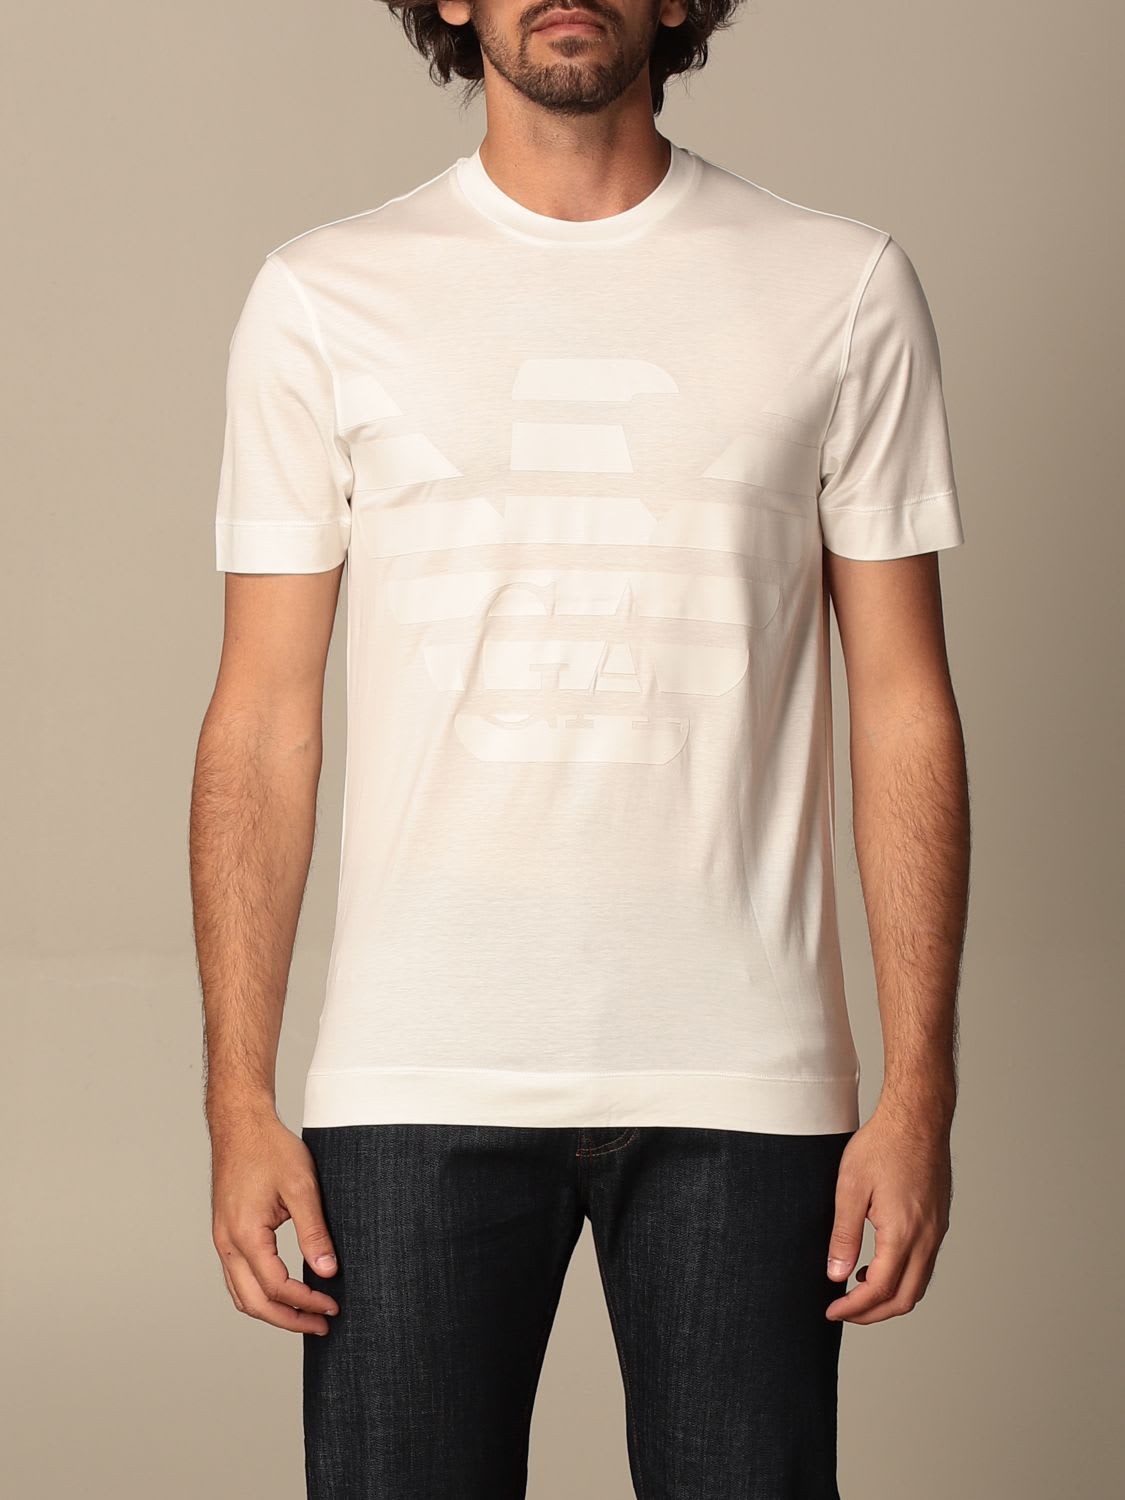 Emporio Armani T-shirt Emporio Armani T-shirt In Stretch Cotton Blend With Big Logo